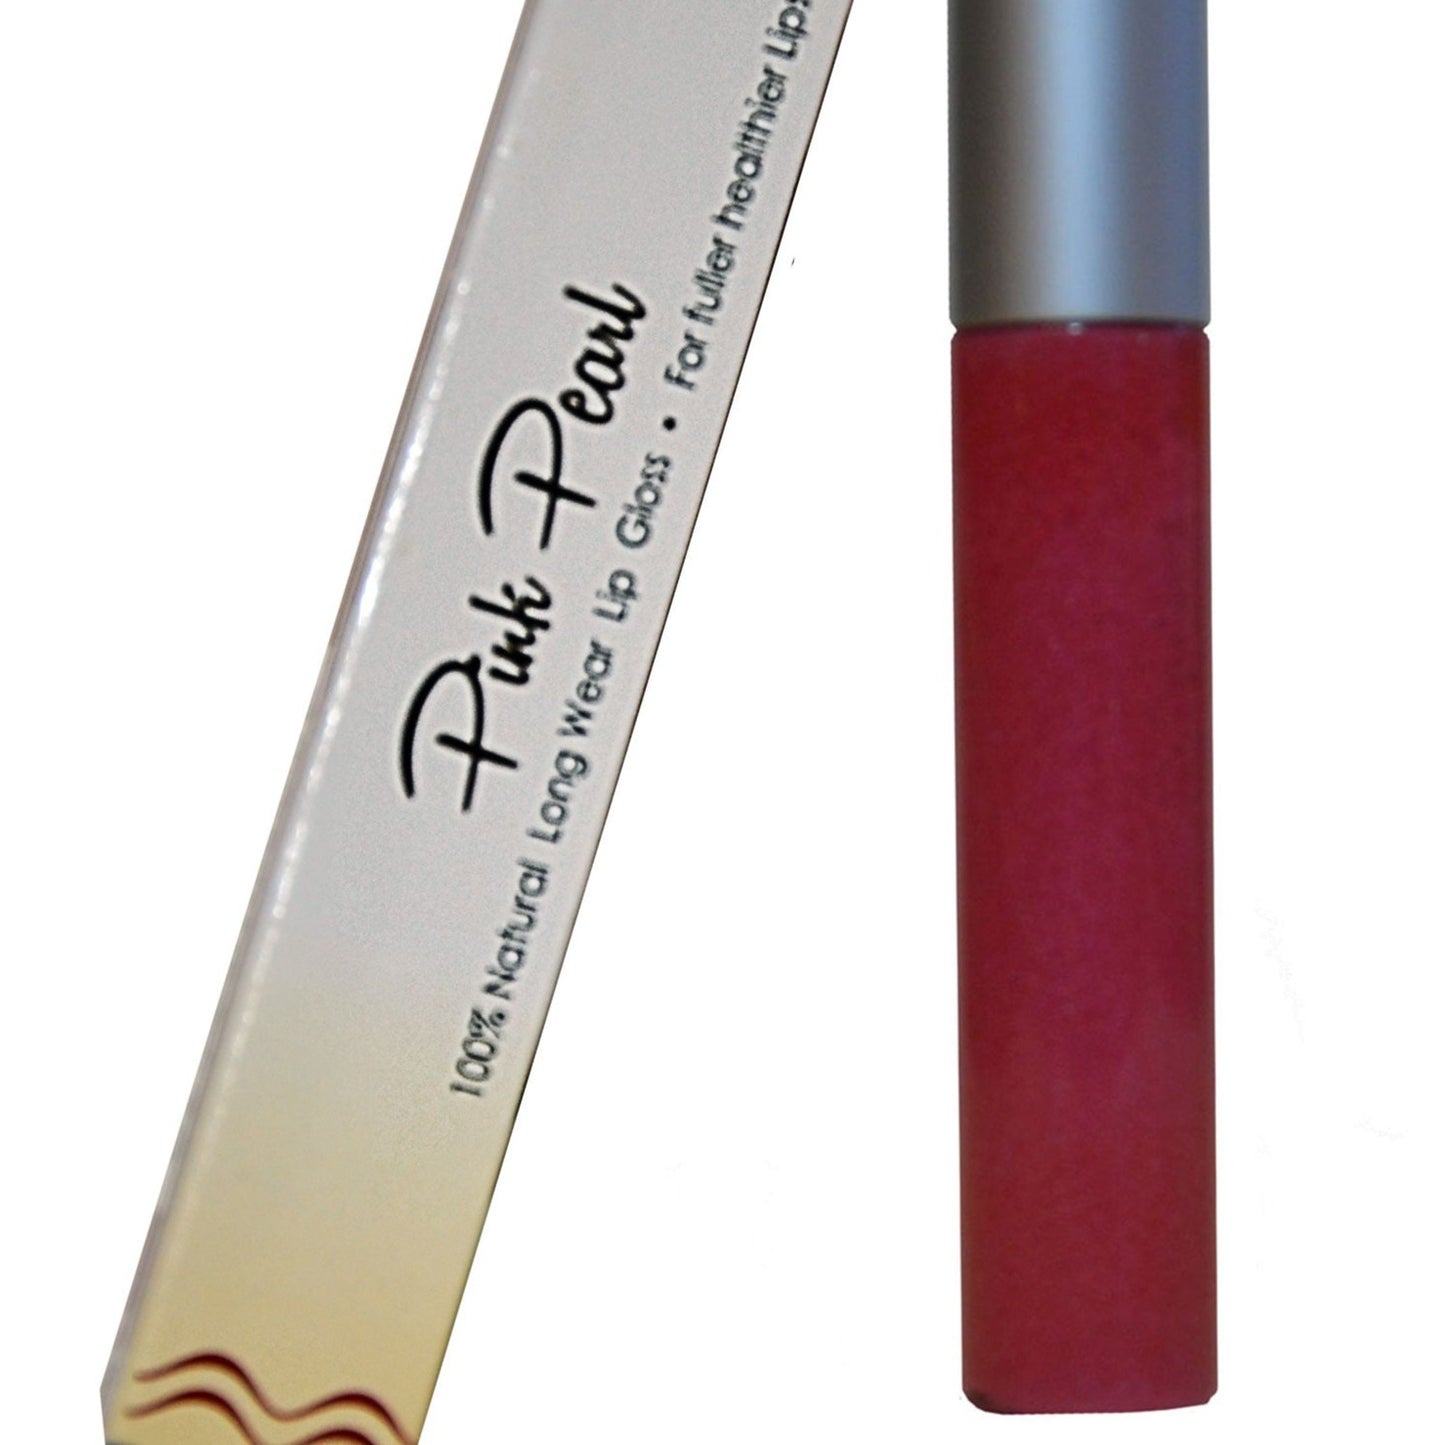 Pearl Pink - 100% Natural Moisturizing Lip Gloss-Penny Lane Organics